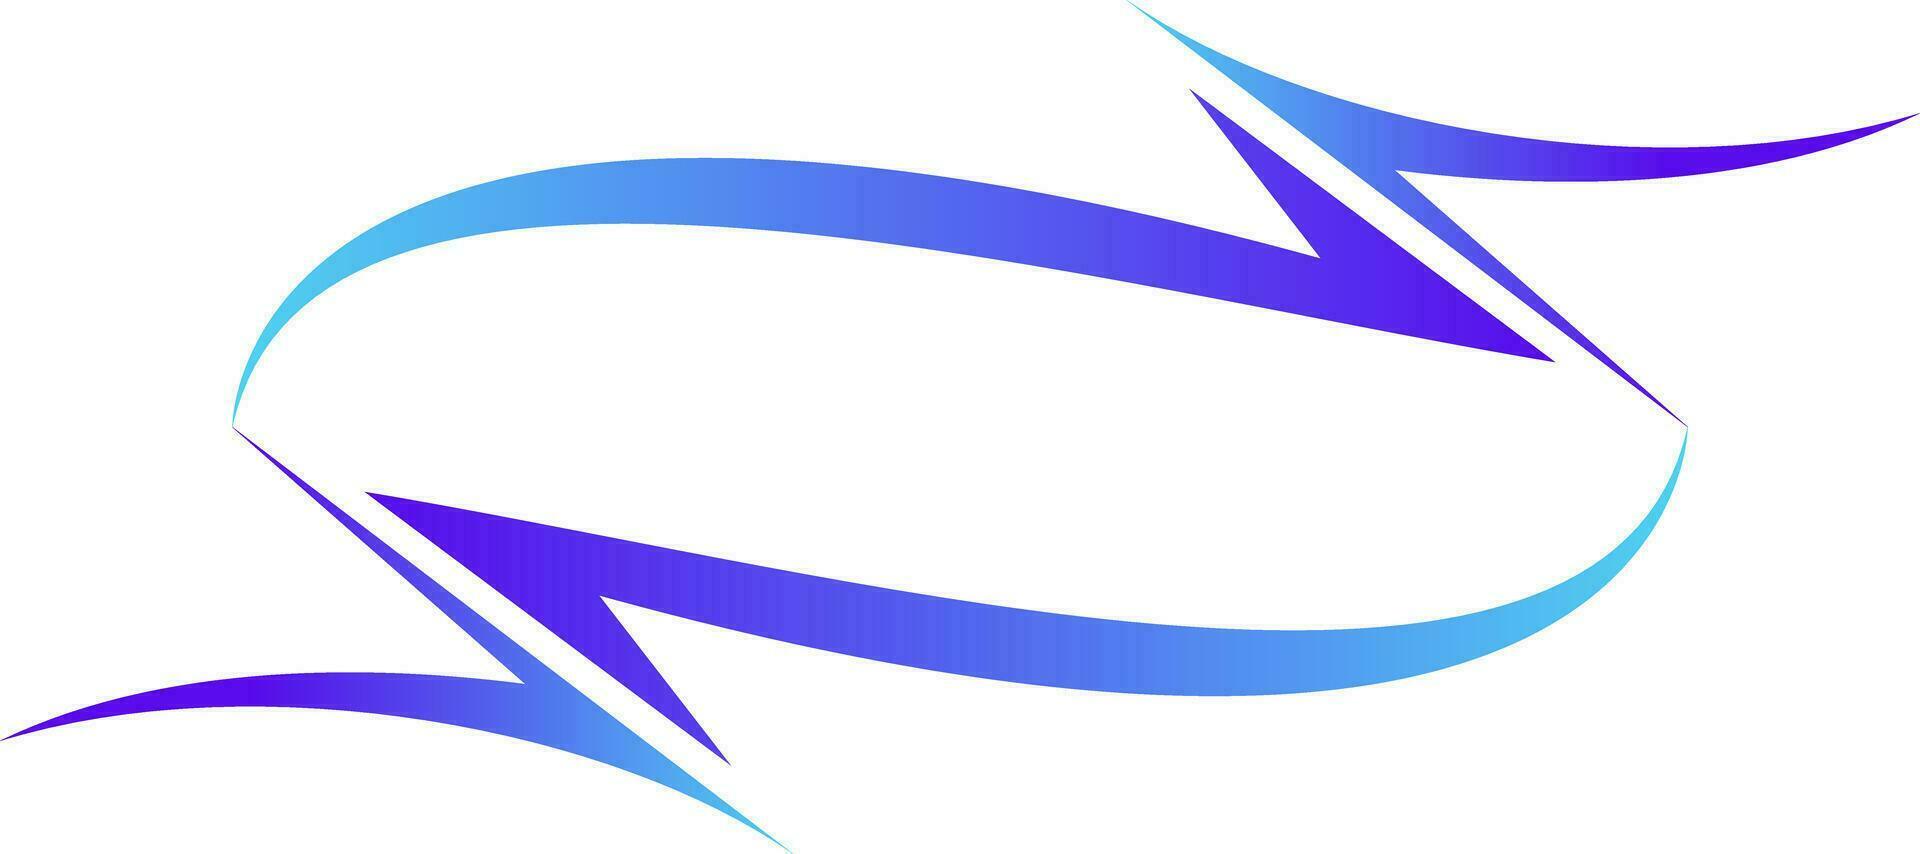 blue curve arrow race car livery sticker design background vector